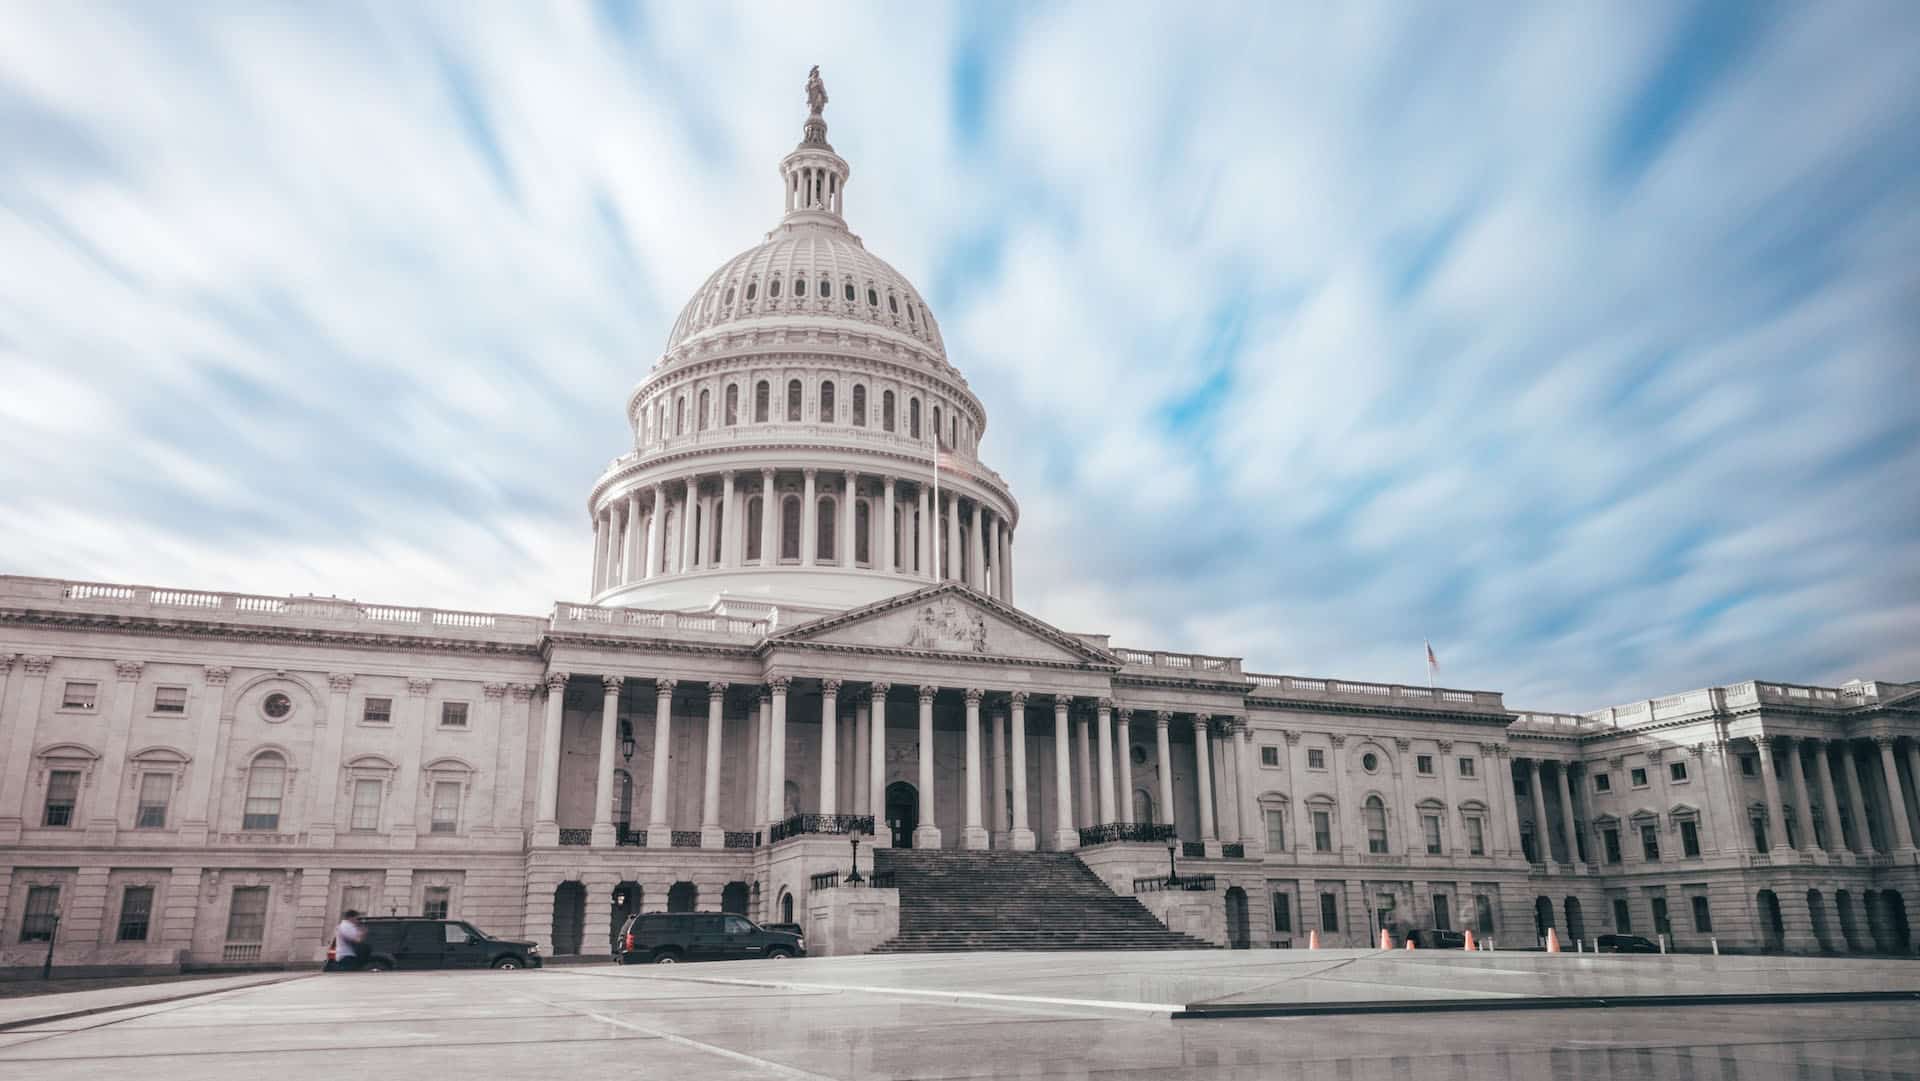 The U.S. Capitol building against a blue sky